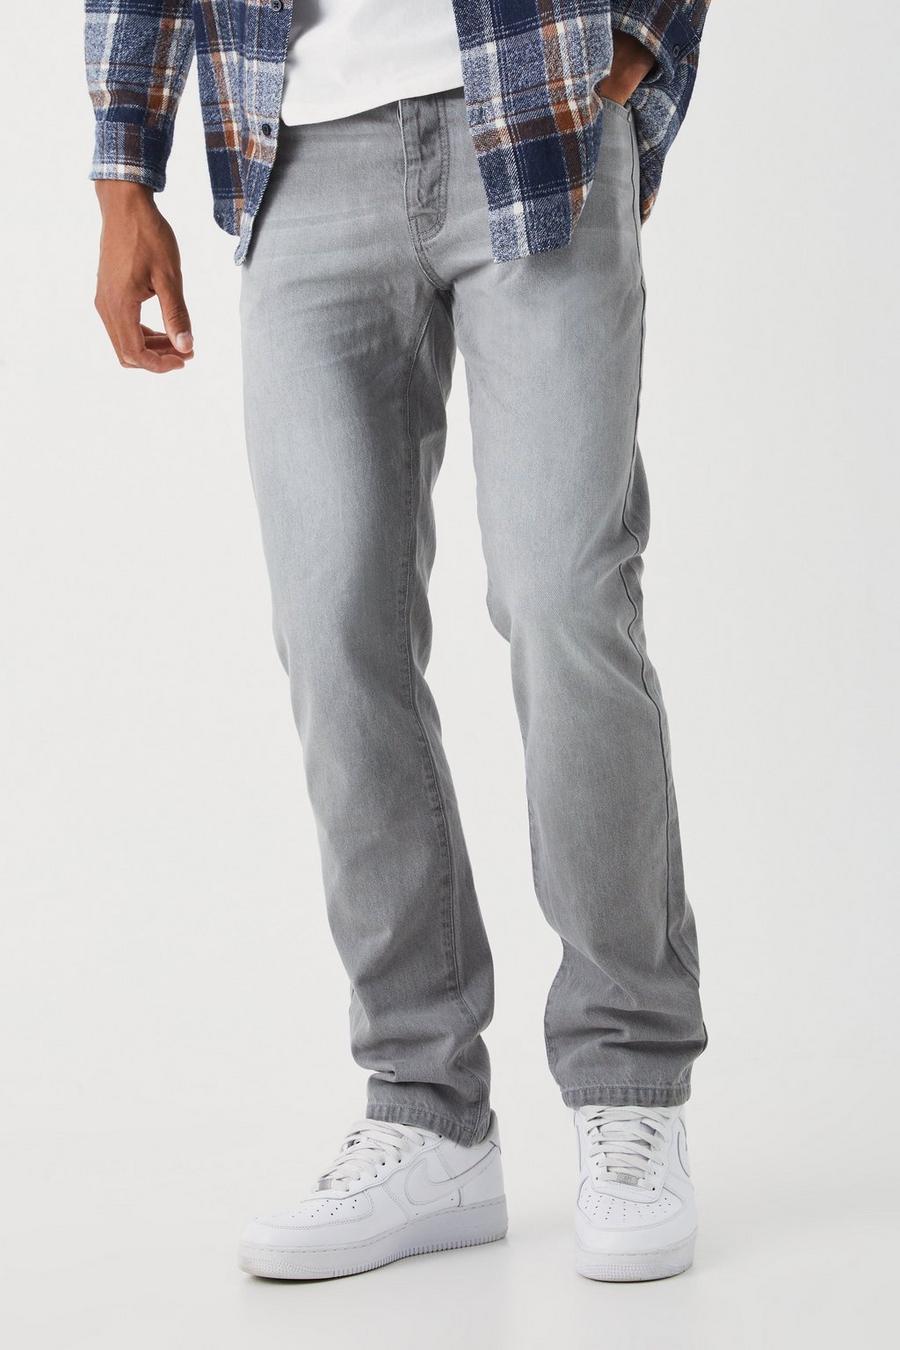 Mid grey jeans vintage school rag evase